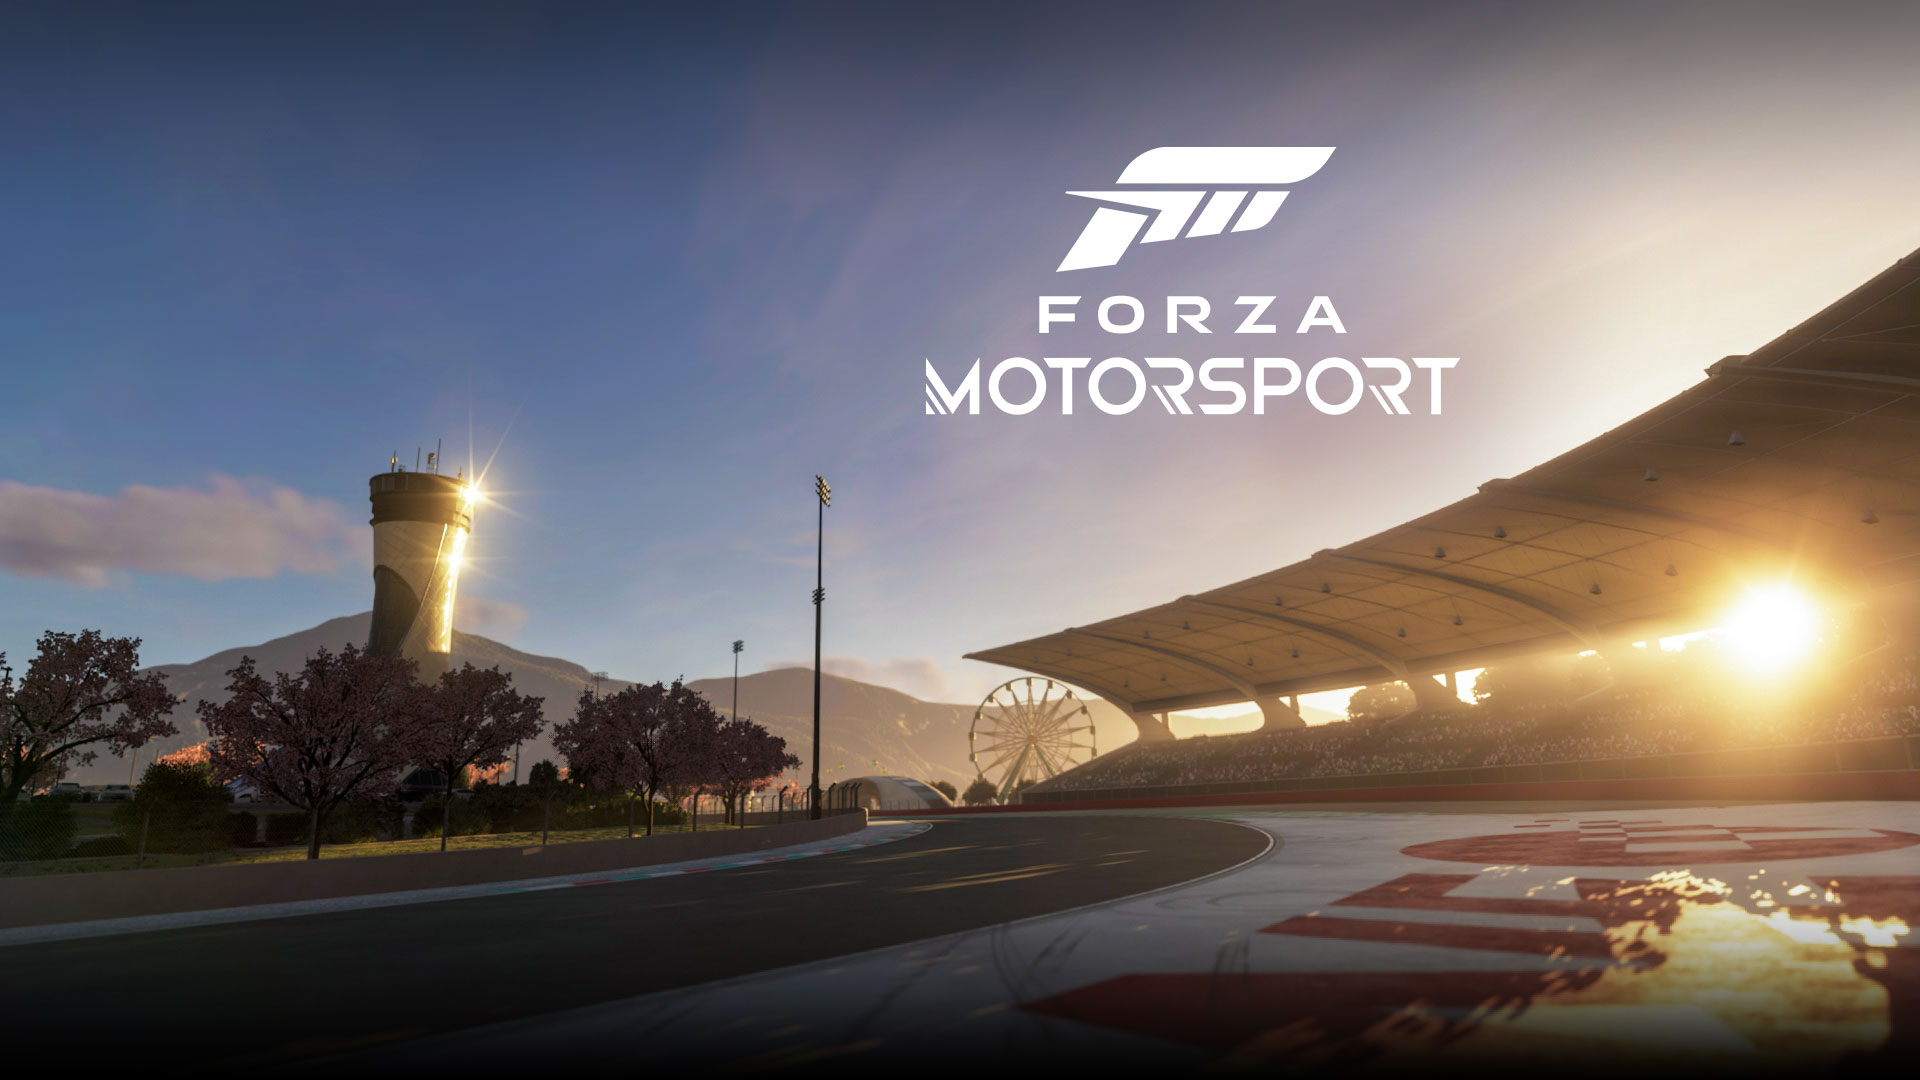 Forza Motorsport, 석양이 레이싱 트랙을 비추고 있습니다.